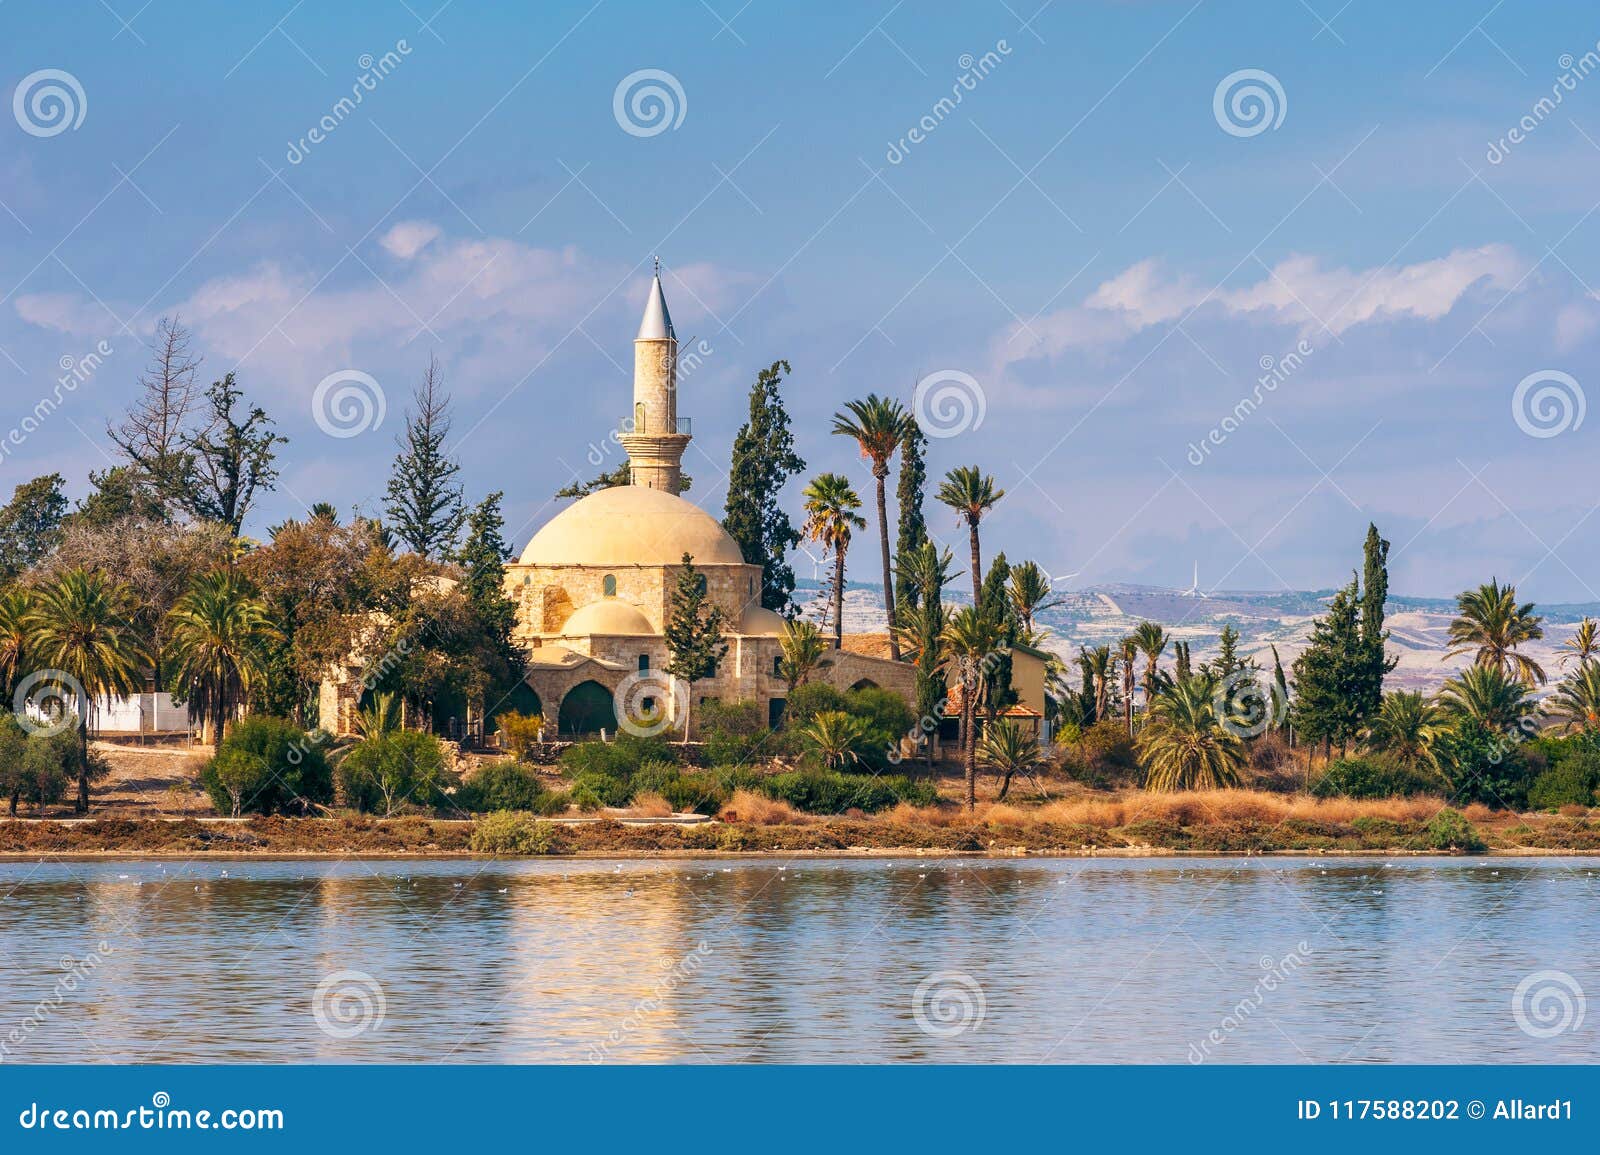 hala sultan tekke mosque in larnaca cyprus